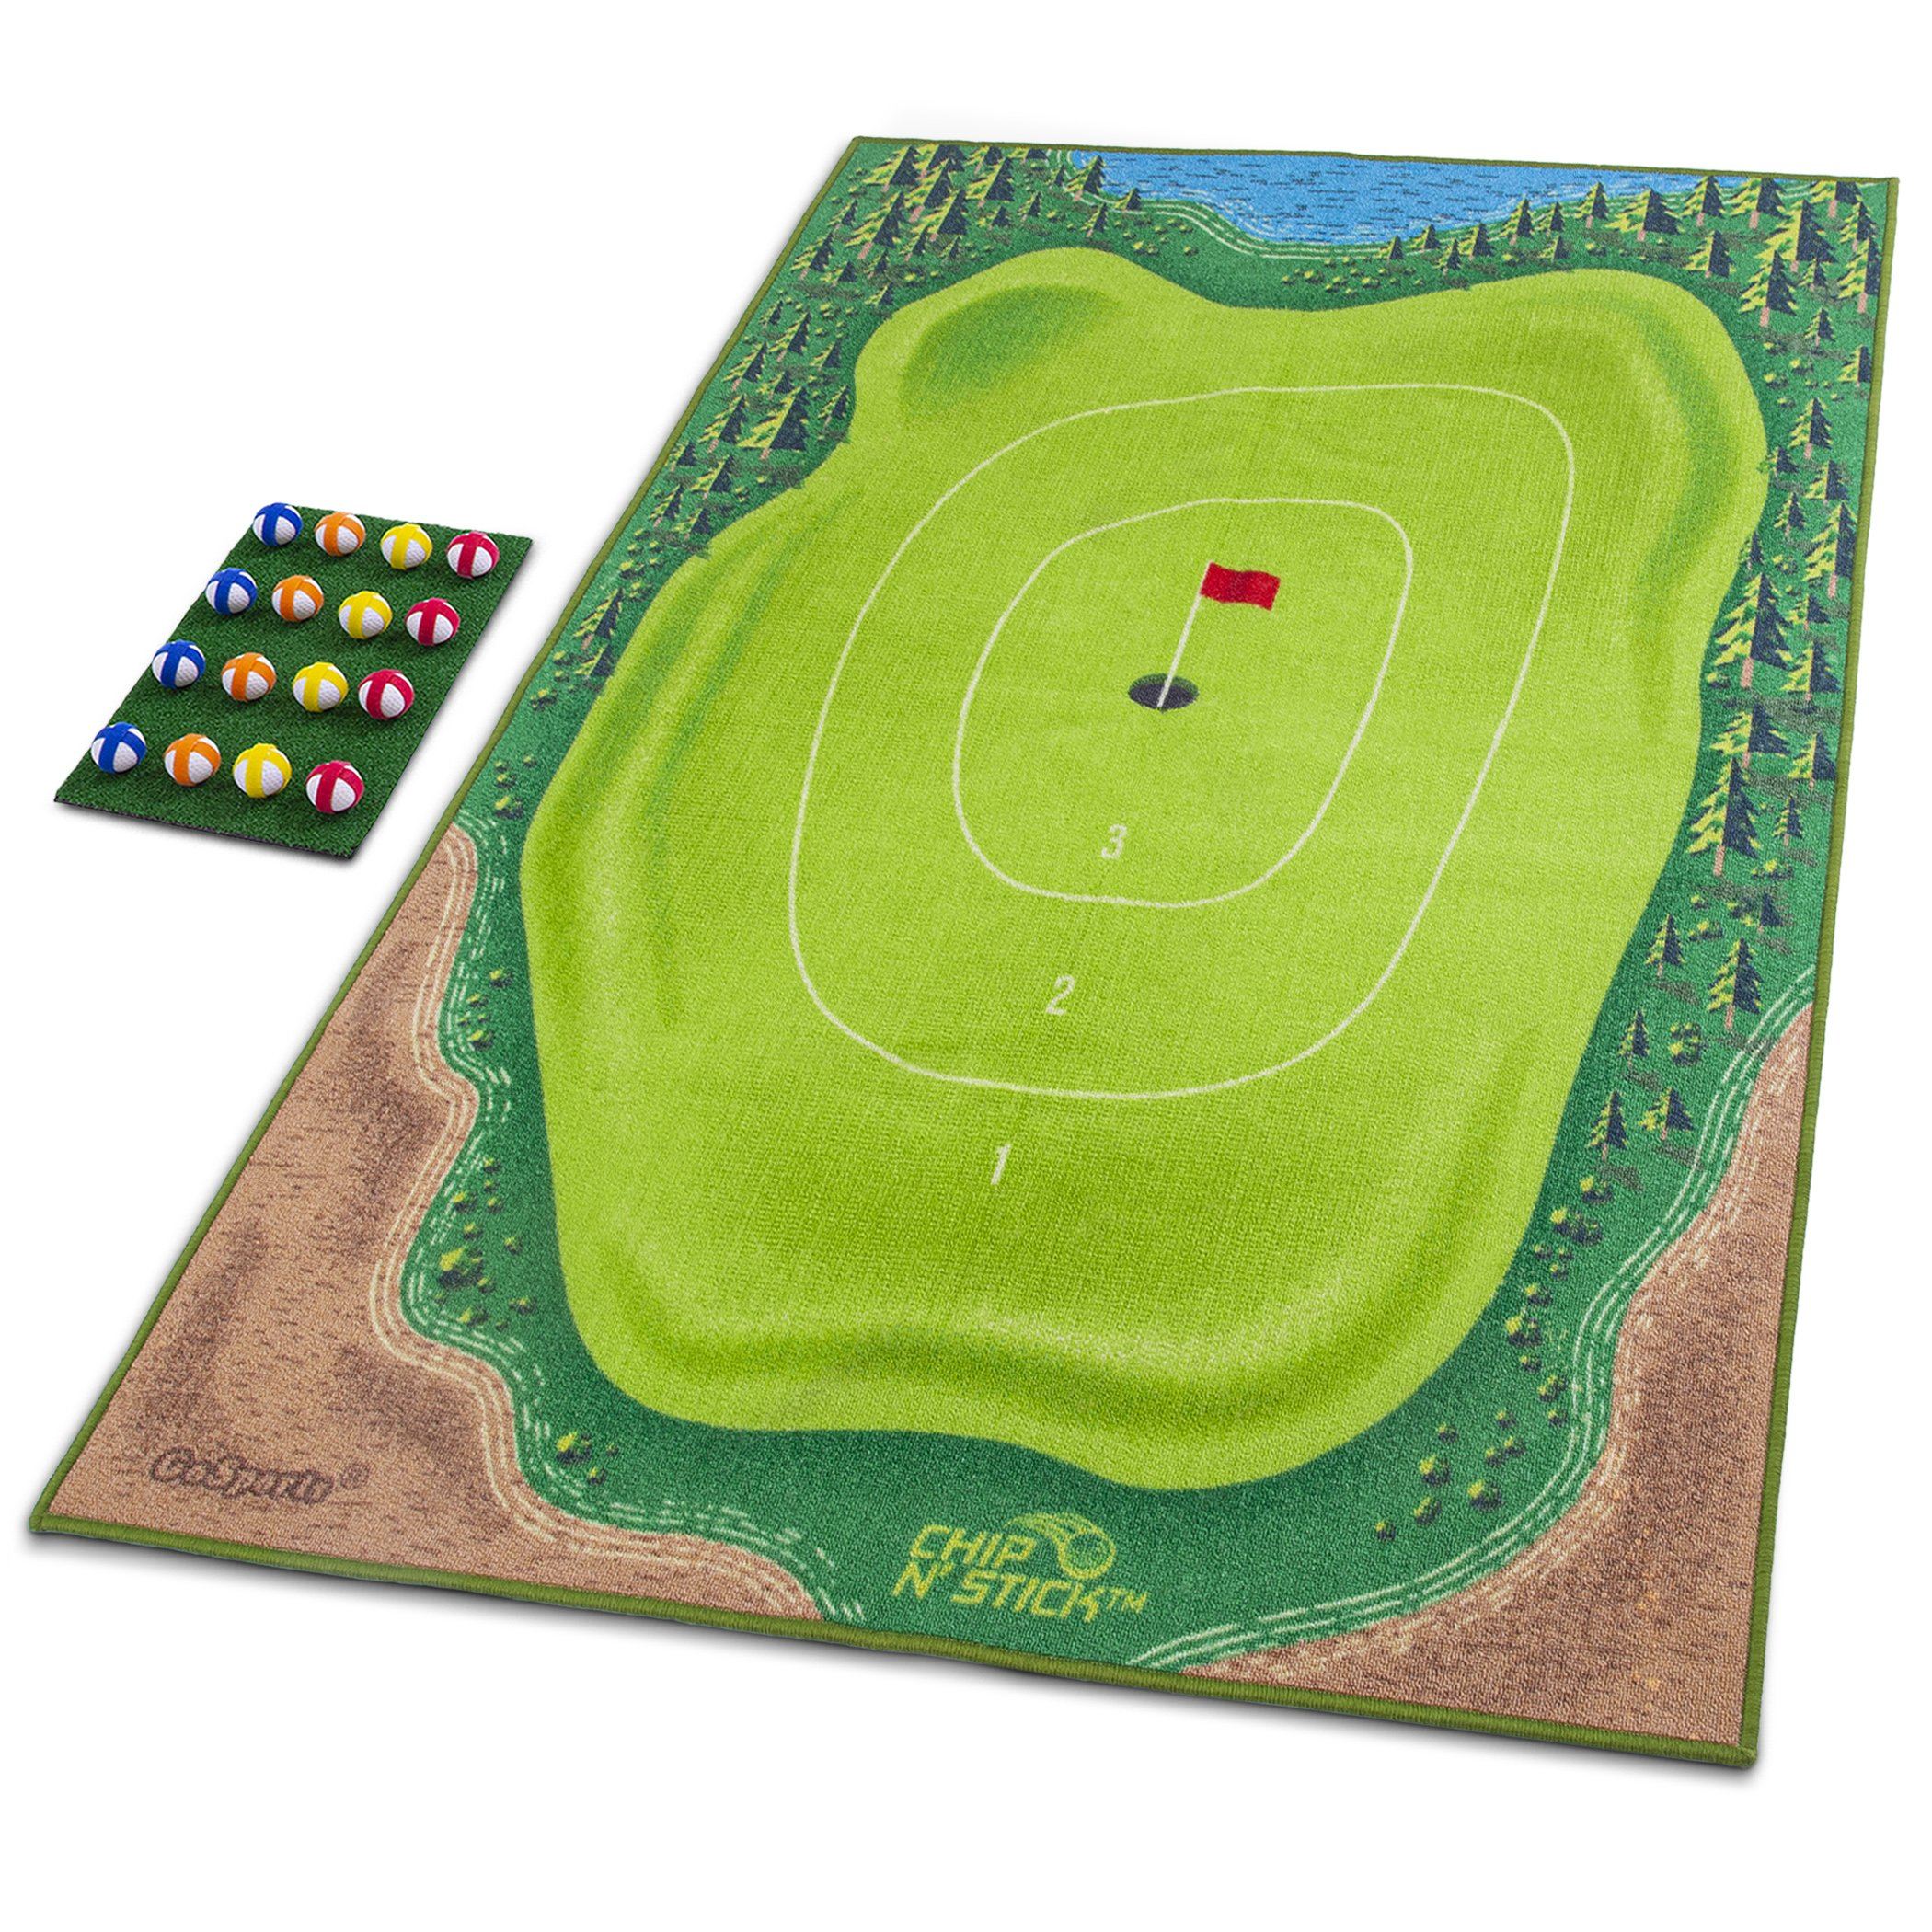 Battle Royale Golf Game, The Casual Golf Game Setp, Backyard Golf